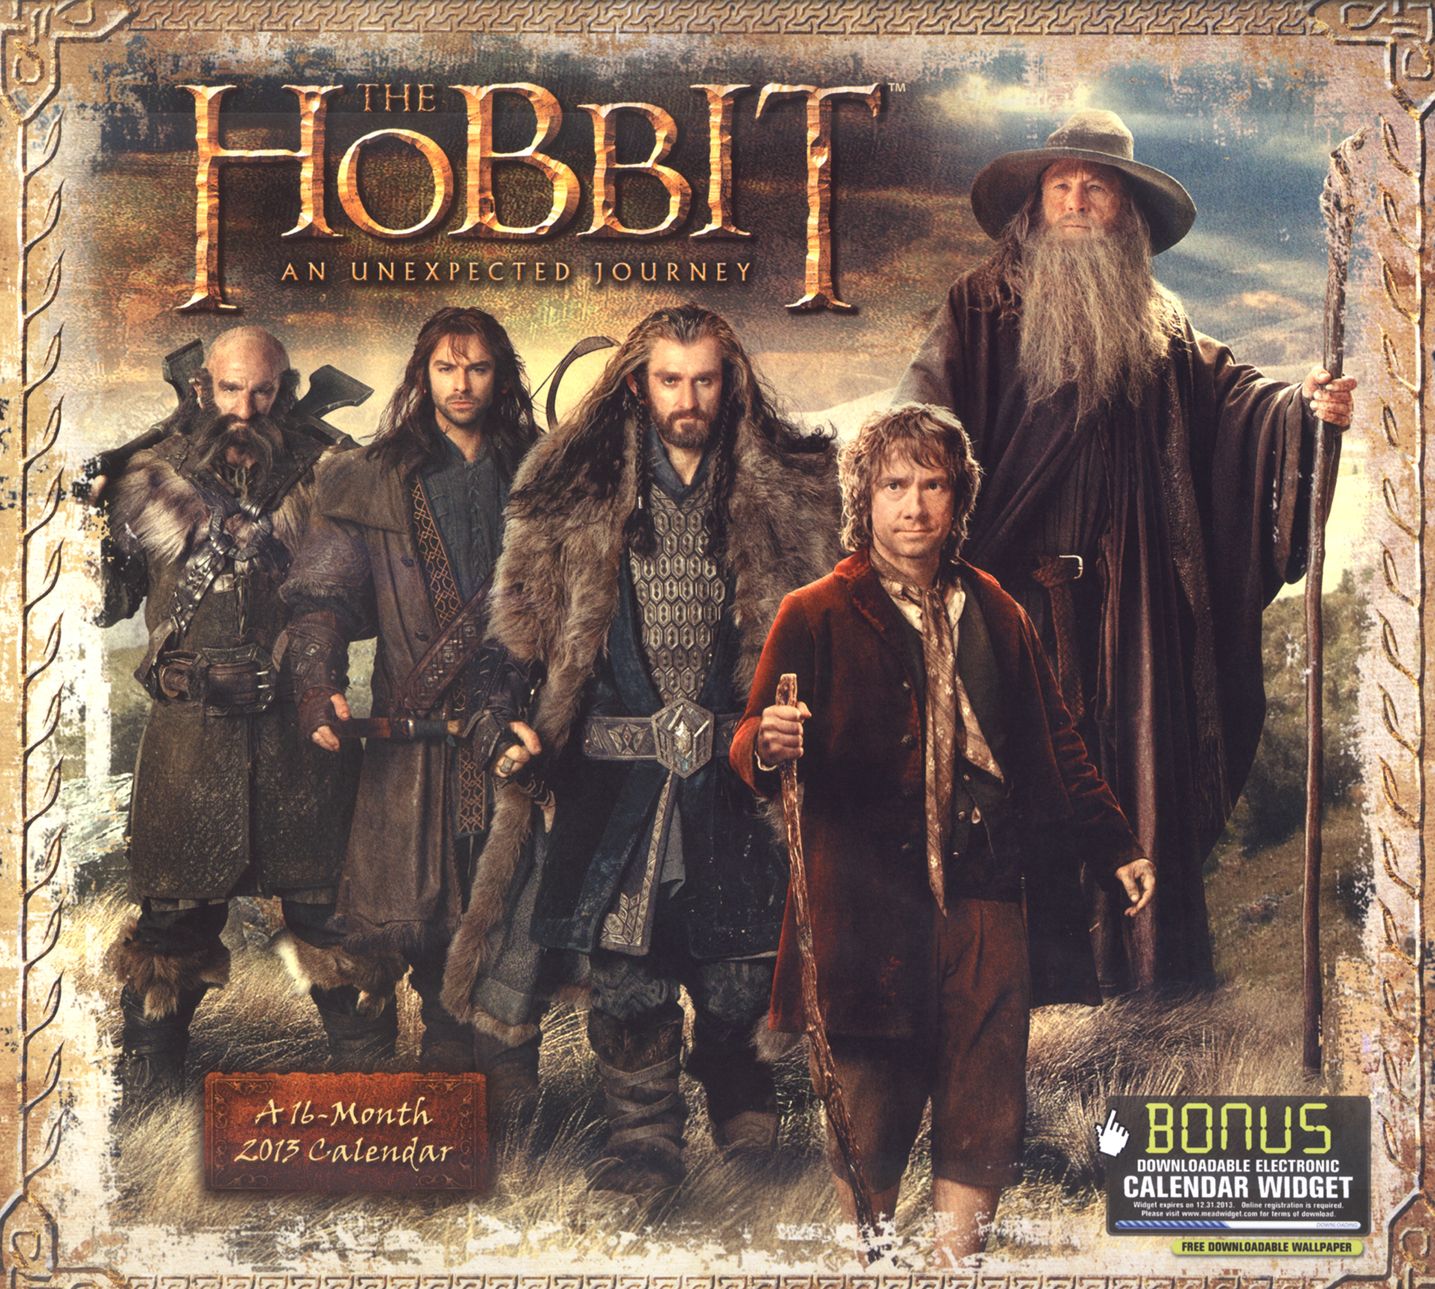 The Hobbit Calendar Cover